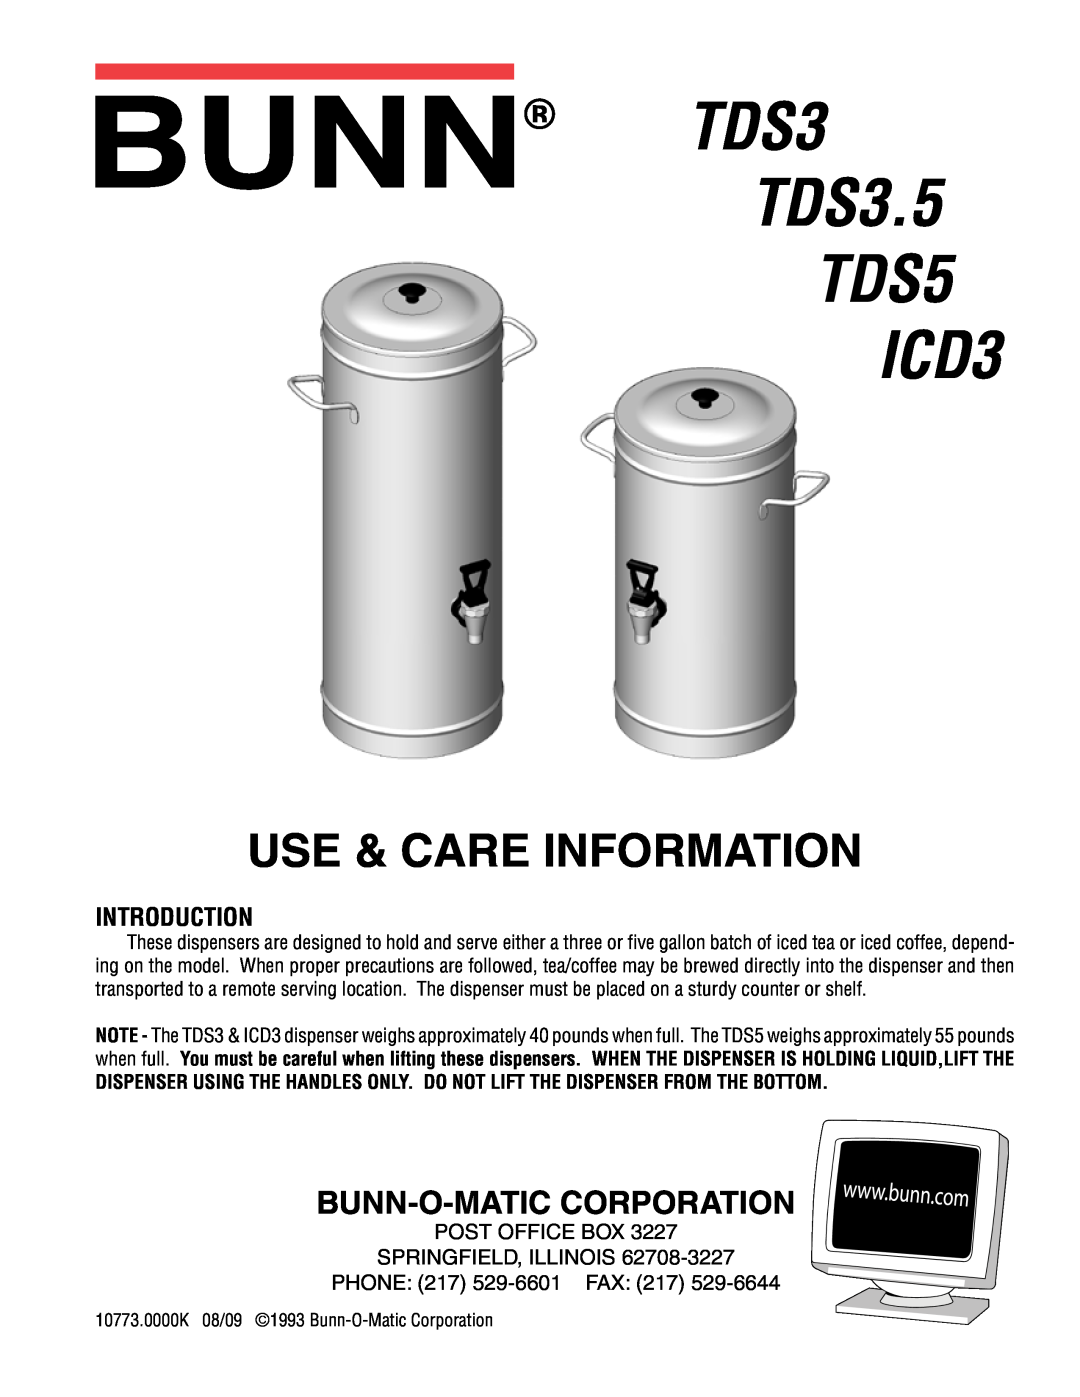 Bunn manual Introduction, Post Office Box Springfield, Illinois, PHONE 217 529-6601FAX, BUNNTDS3, TDS5 ICD3 